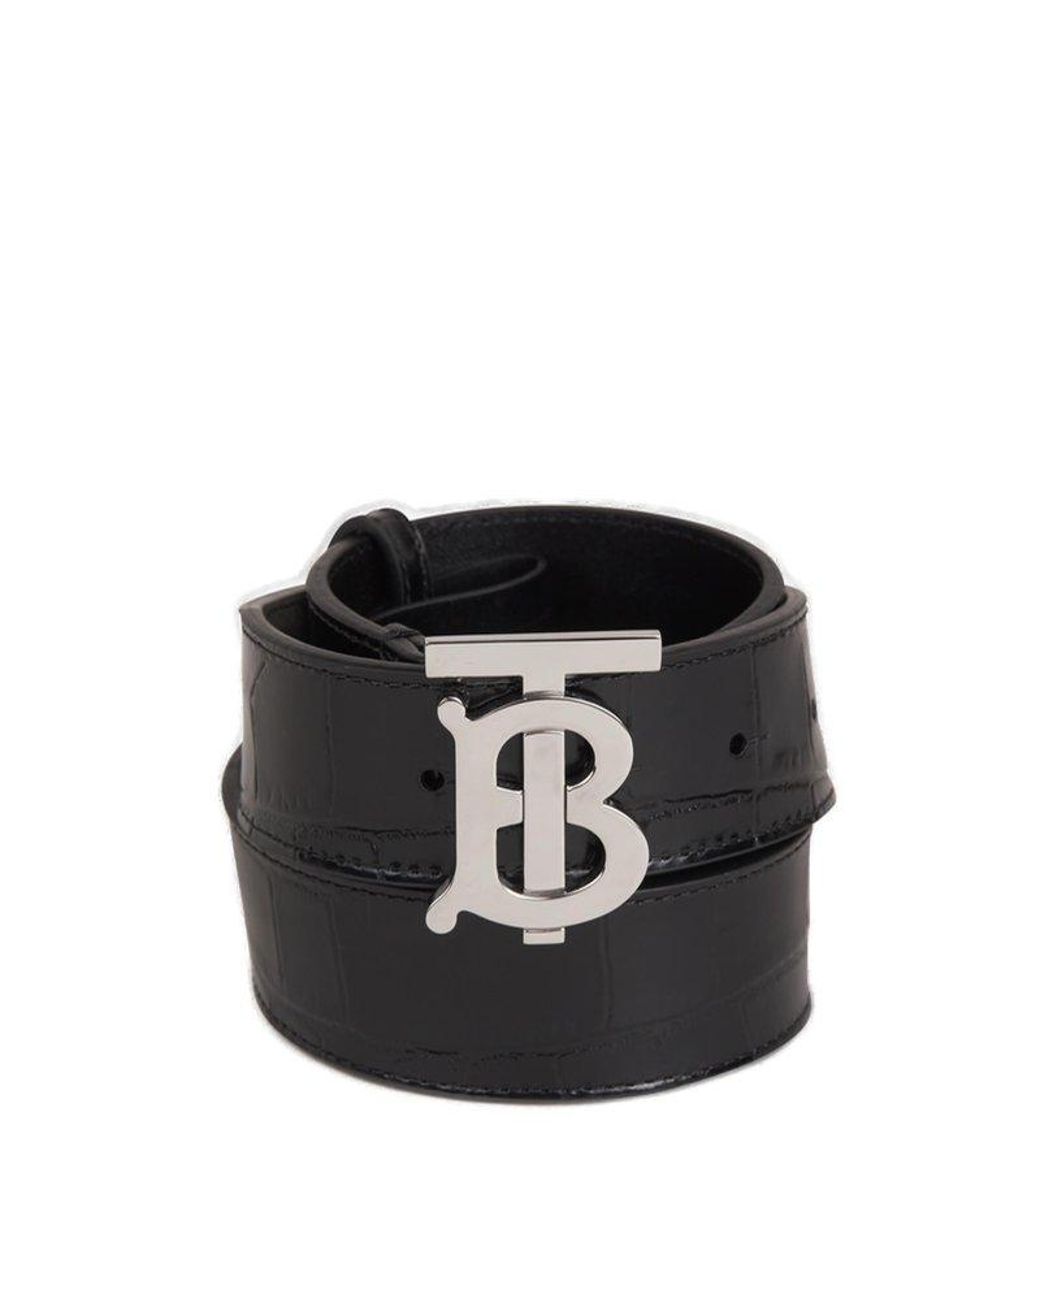 Burberry Double B Buckle Leather Belt - Farfetch